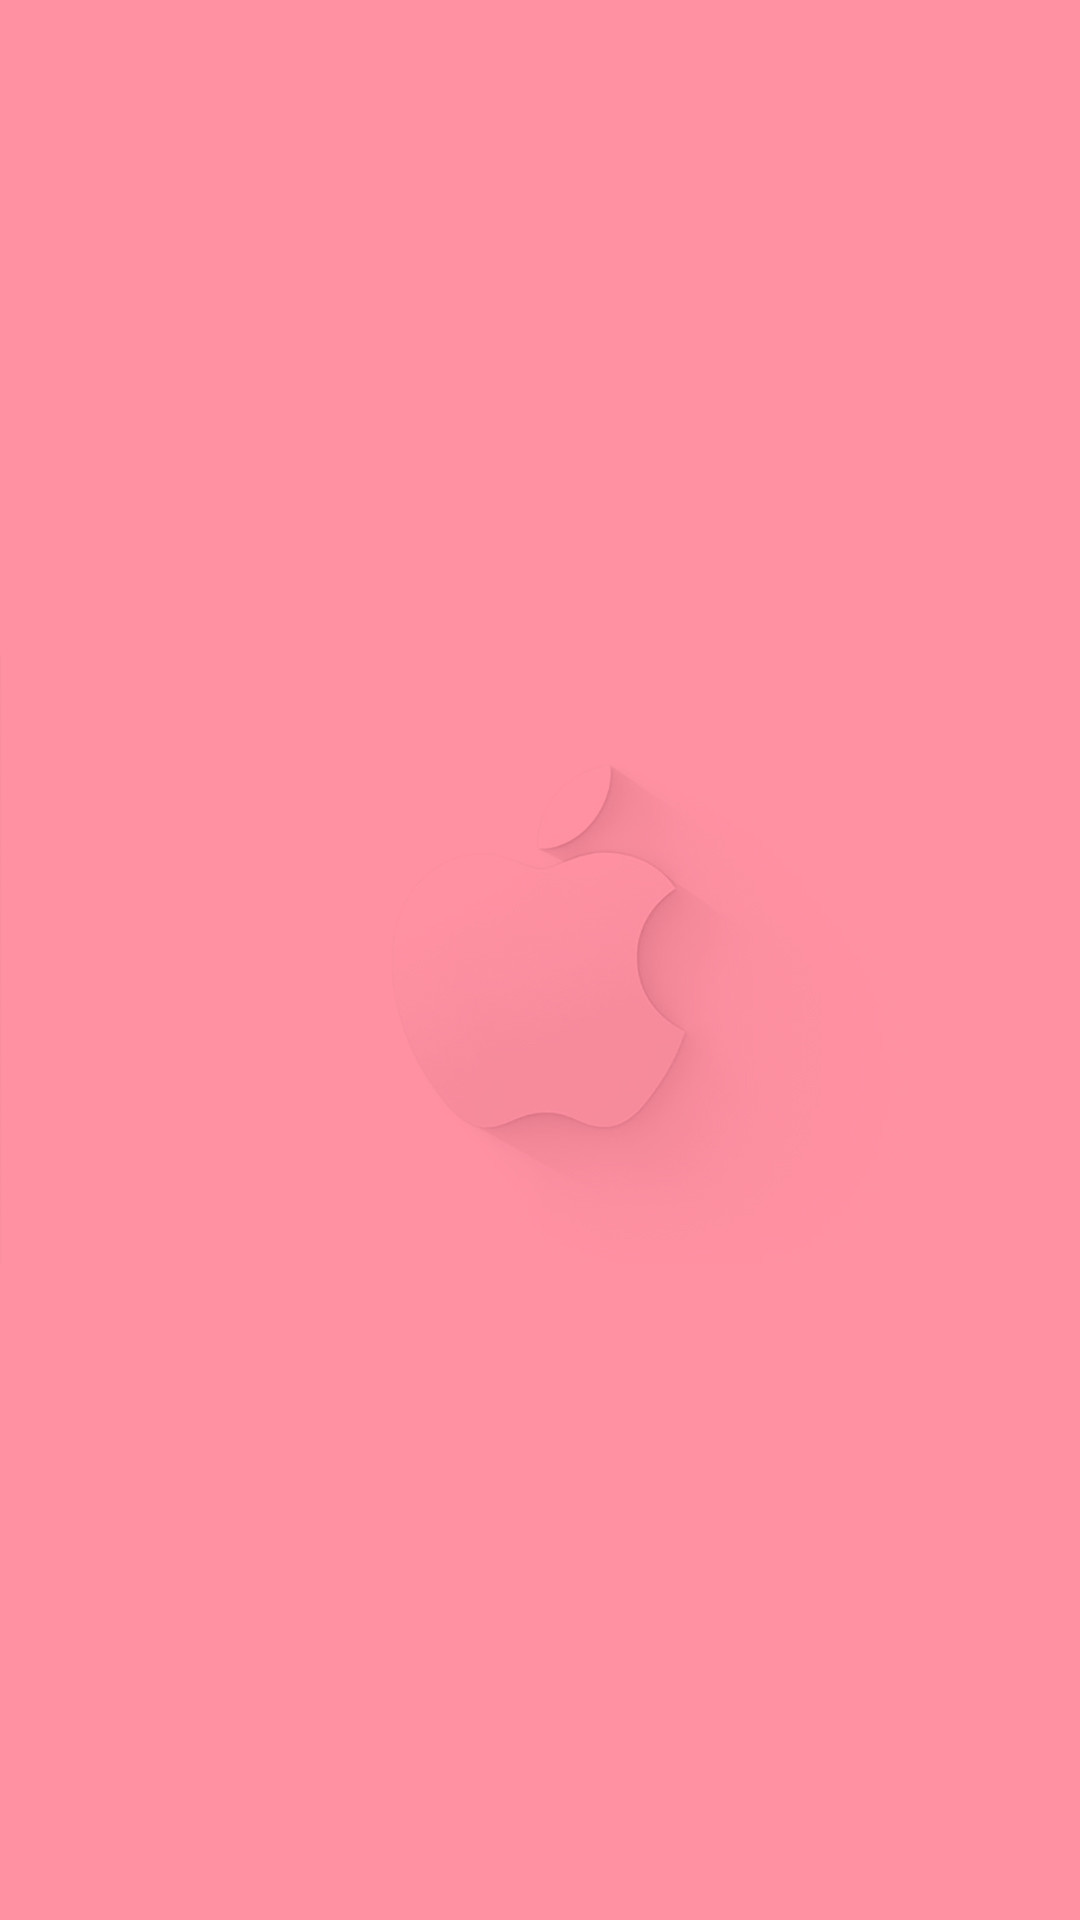 1080x1920 Pink iPhone7 wallpaper